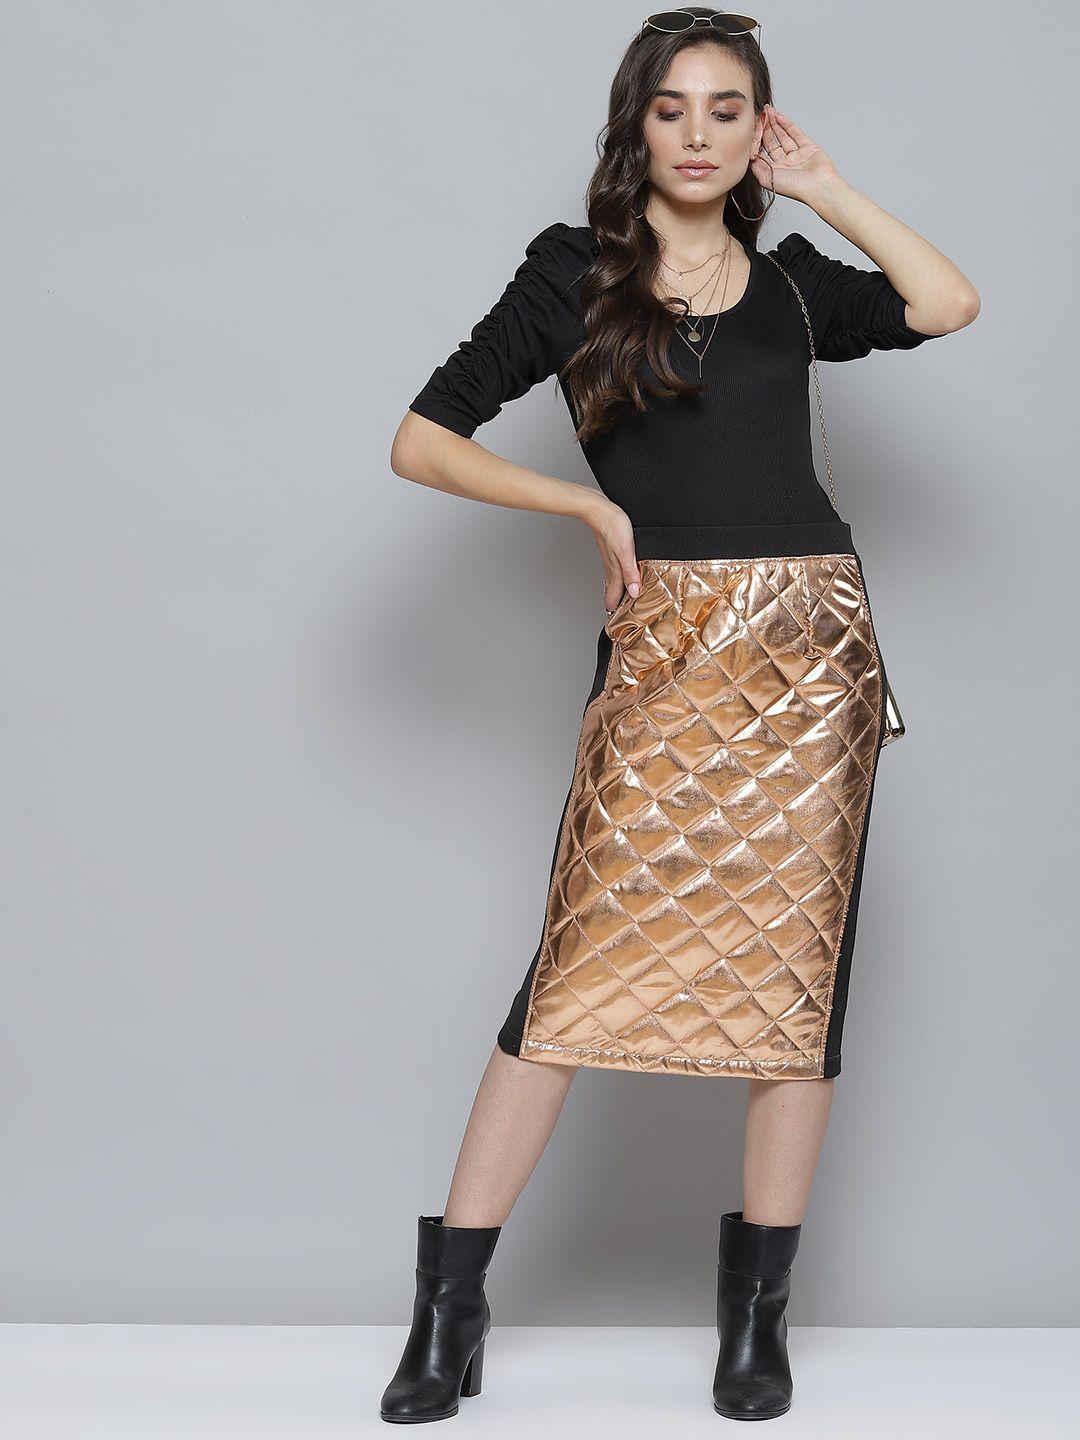 sassafras women copper & black quilted metallic pencil skirt